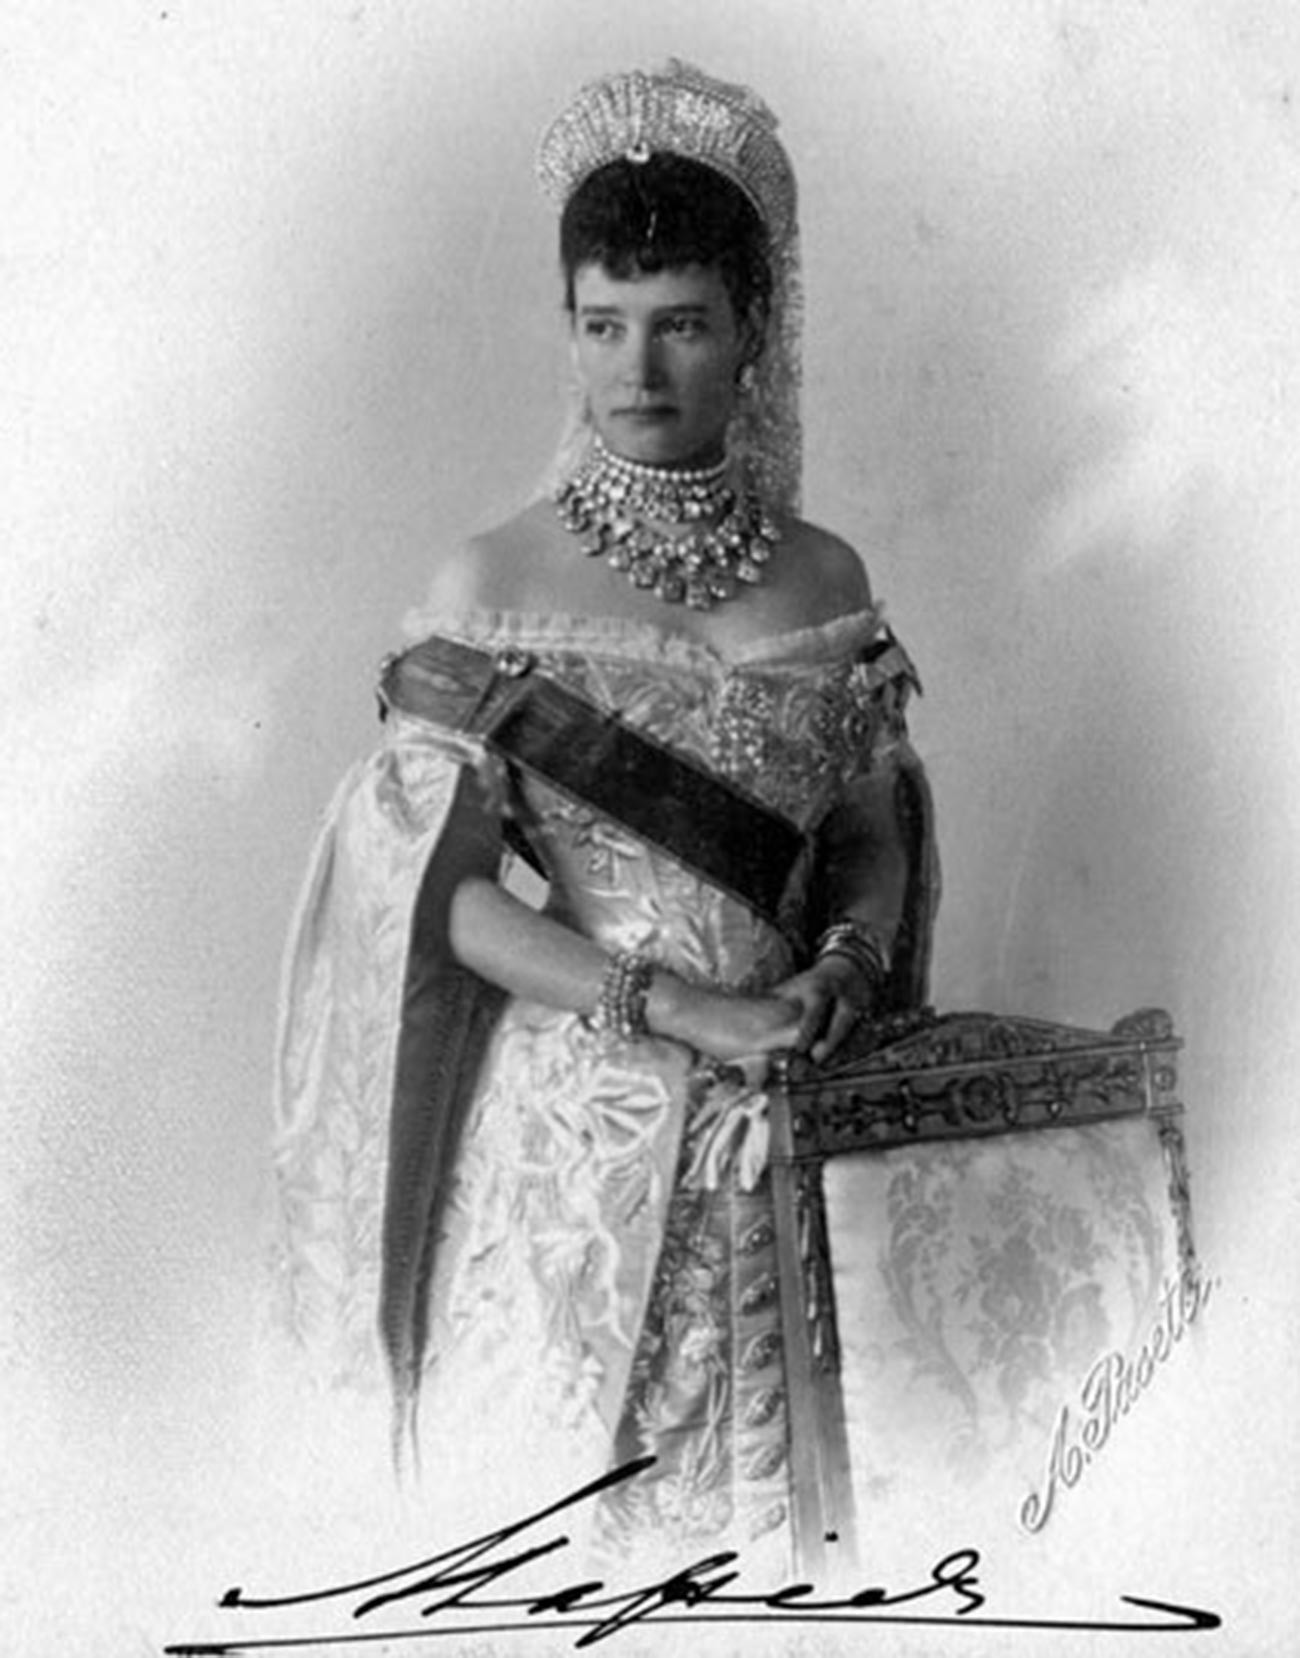 Imperatriz Maria Feodorovna (Dagmar da Dinamarca, 1847-1928)
